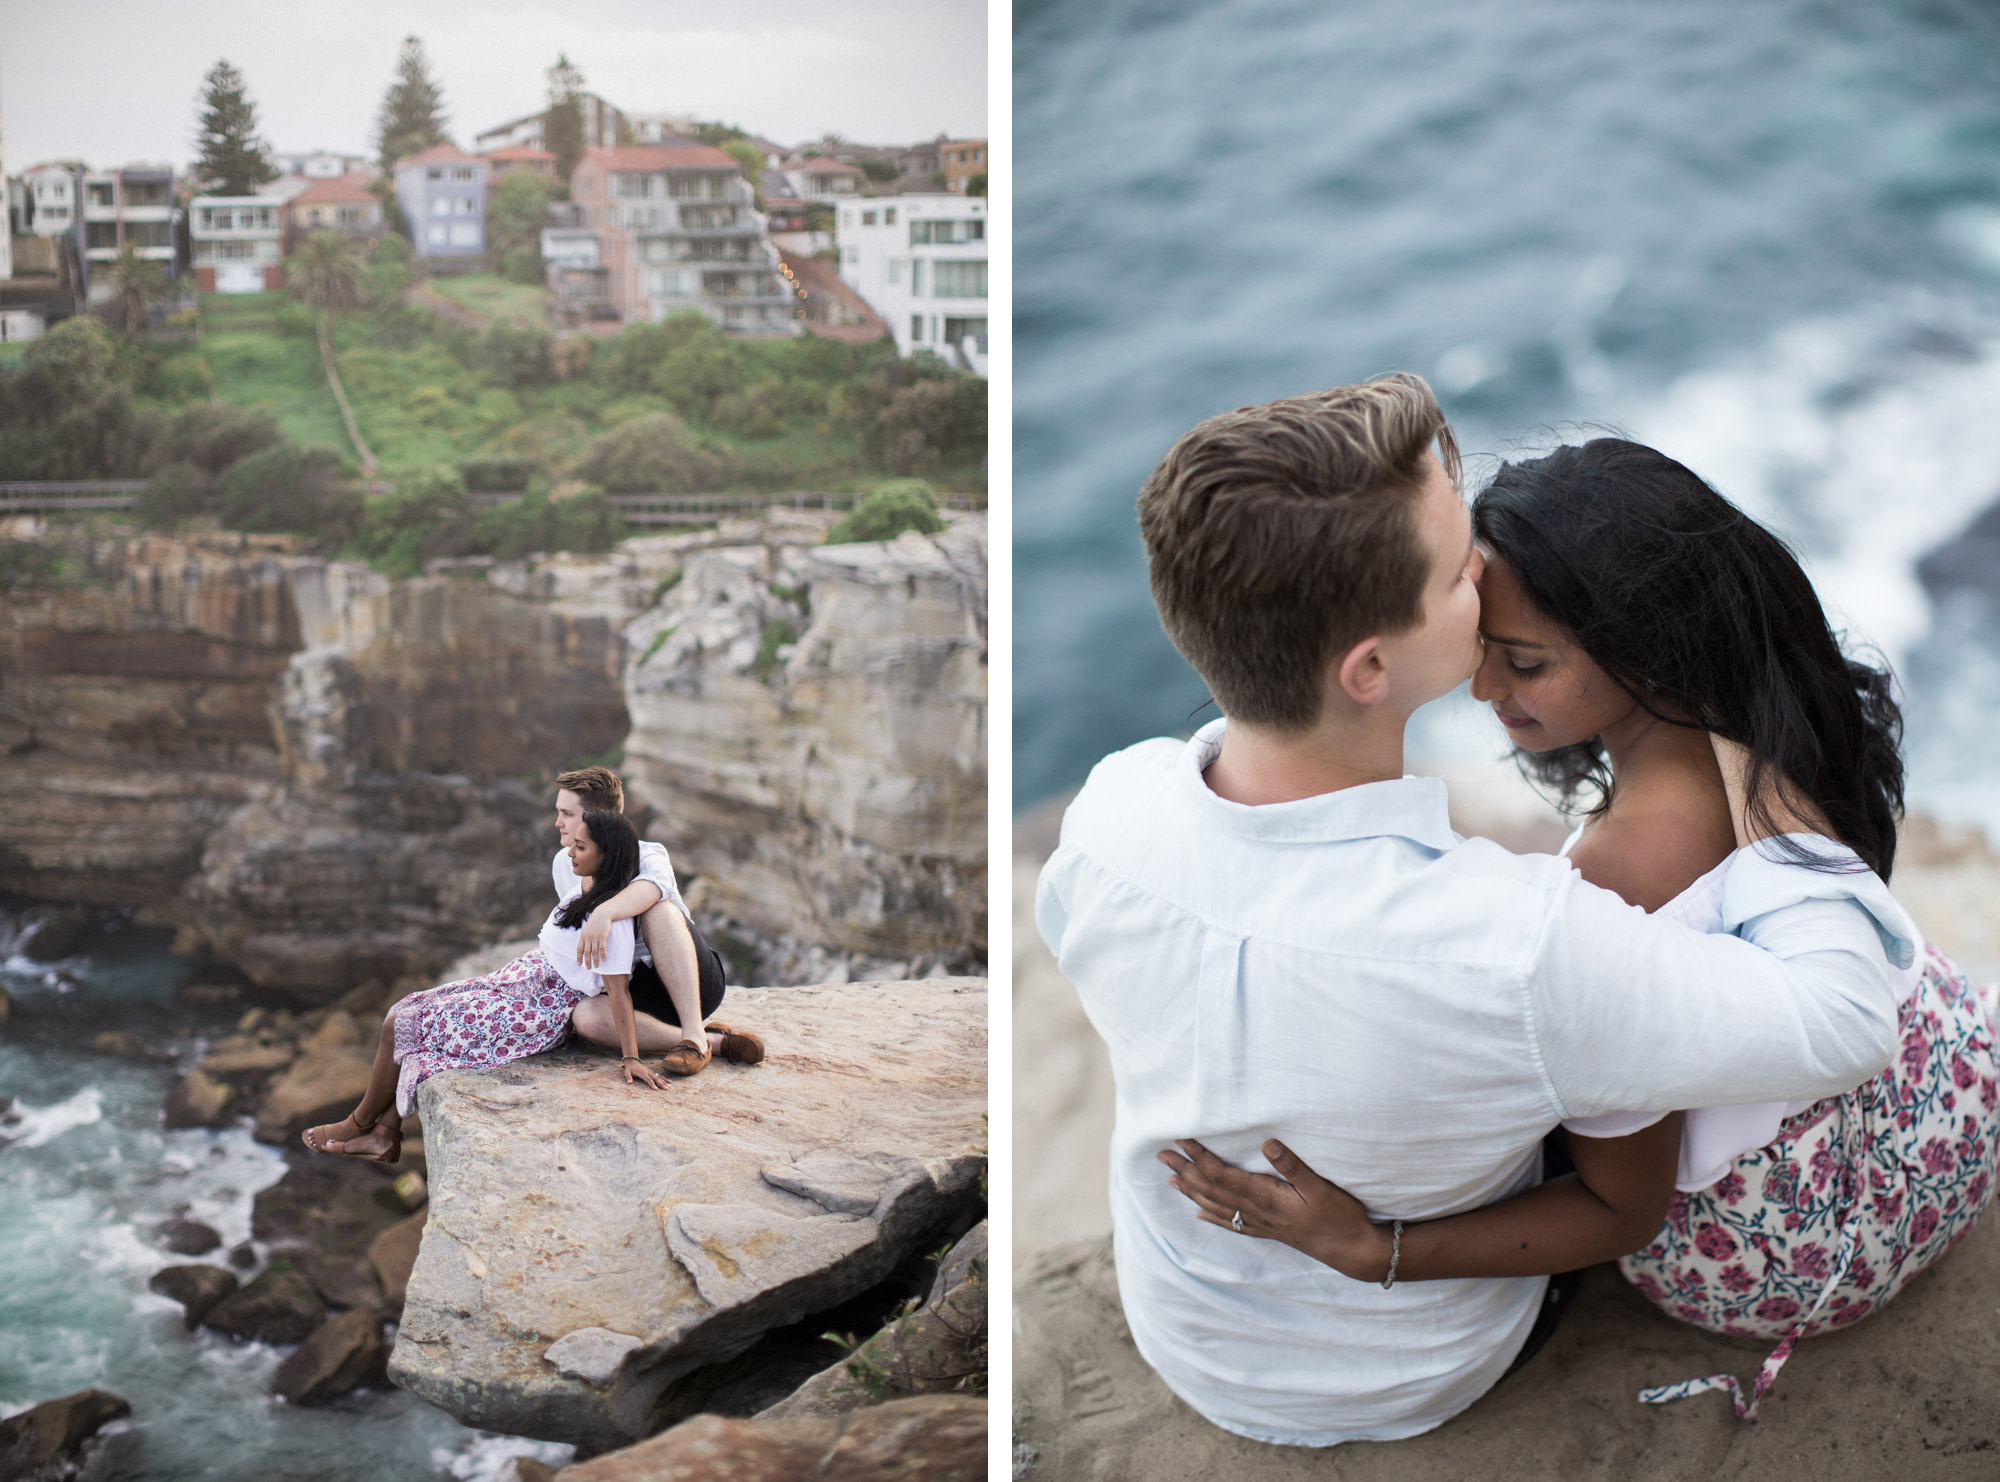 Engagement photos in Vaucluse in Sydney, Australia. Photos by Kelly Kollar Photography.